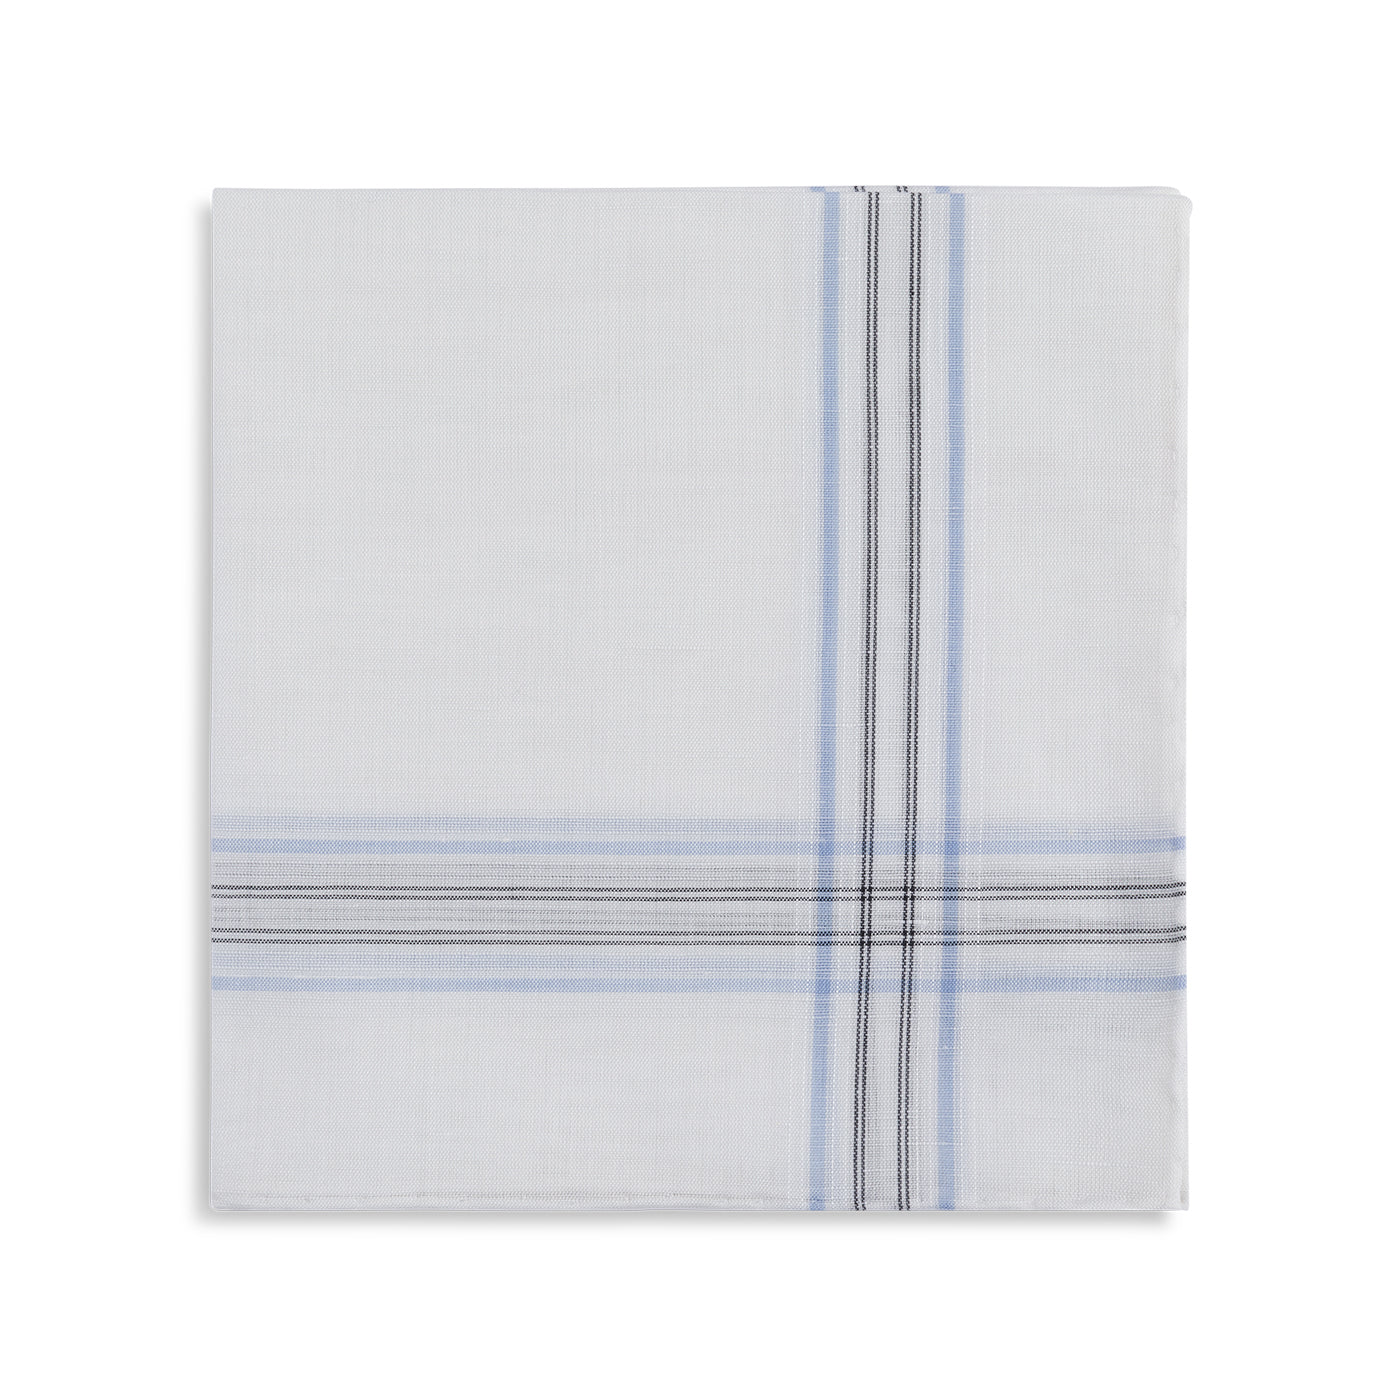 Simonnot Godard "Aran" Pocket Square in White with Blue & Black Check